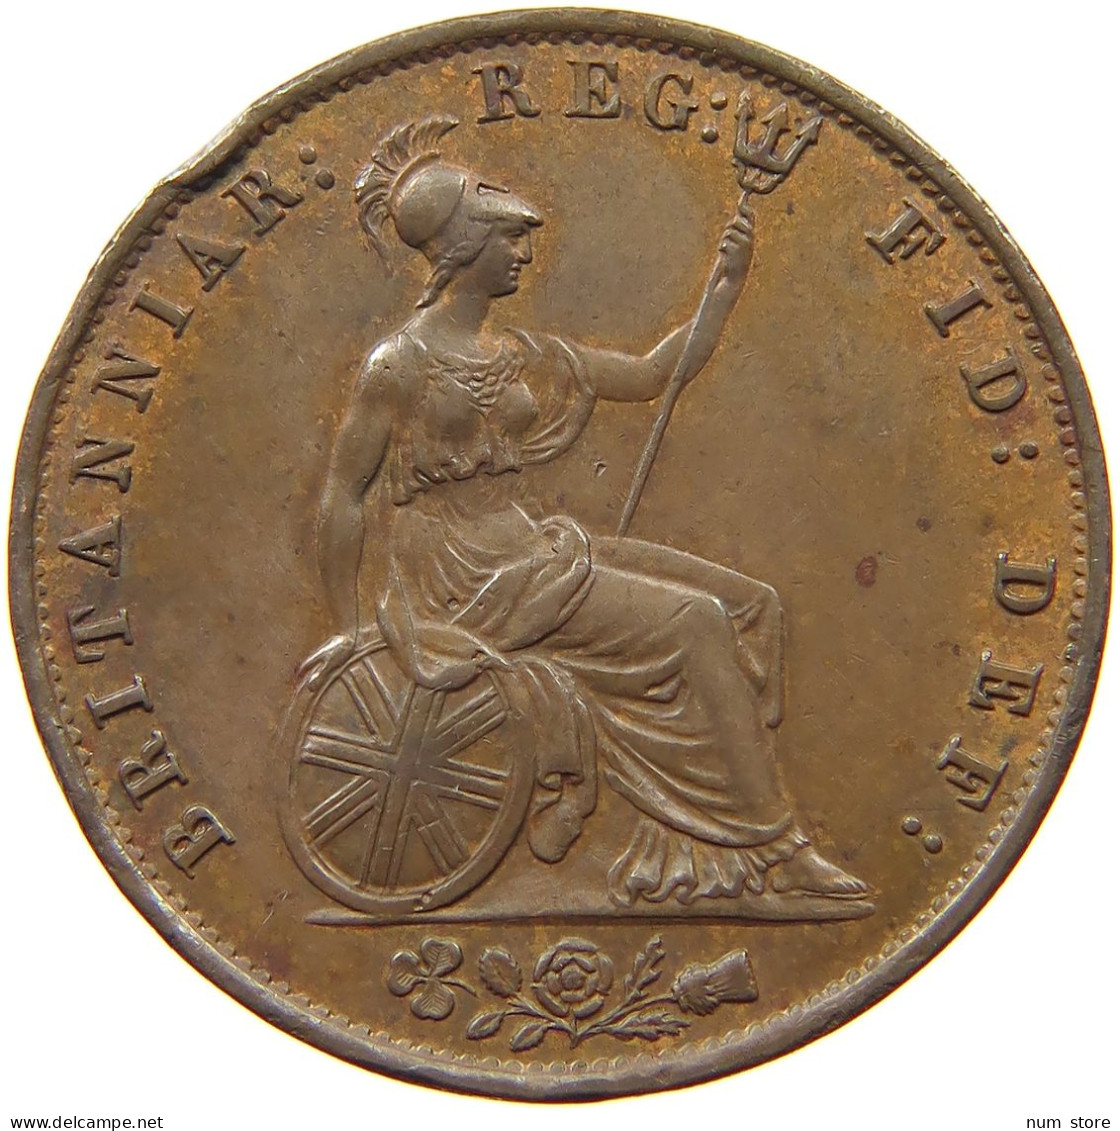 GREAT BRITAIN HALFPENNY 1855 Victoria 1837-1901 #t149 0117 - C. 1/2 Penny